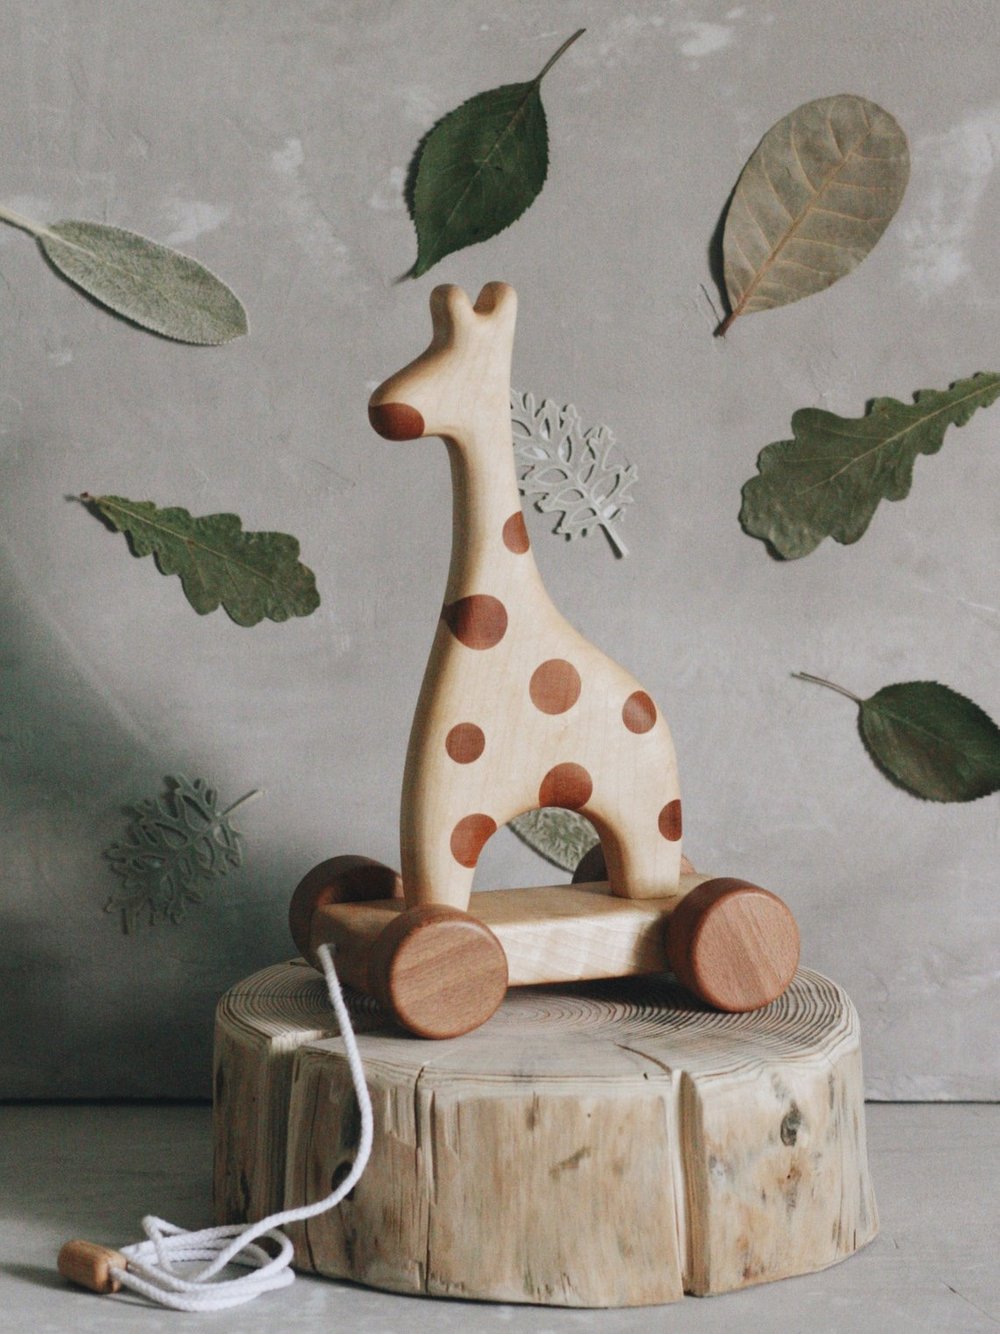 girafe-roulette-bois-idees-cadeaux-0-3-ans-noemiememories.jpg